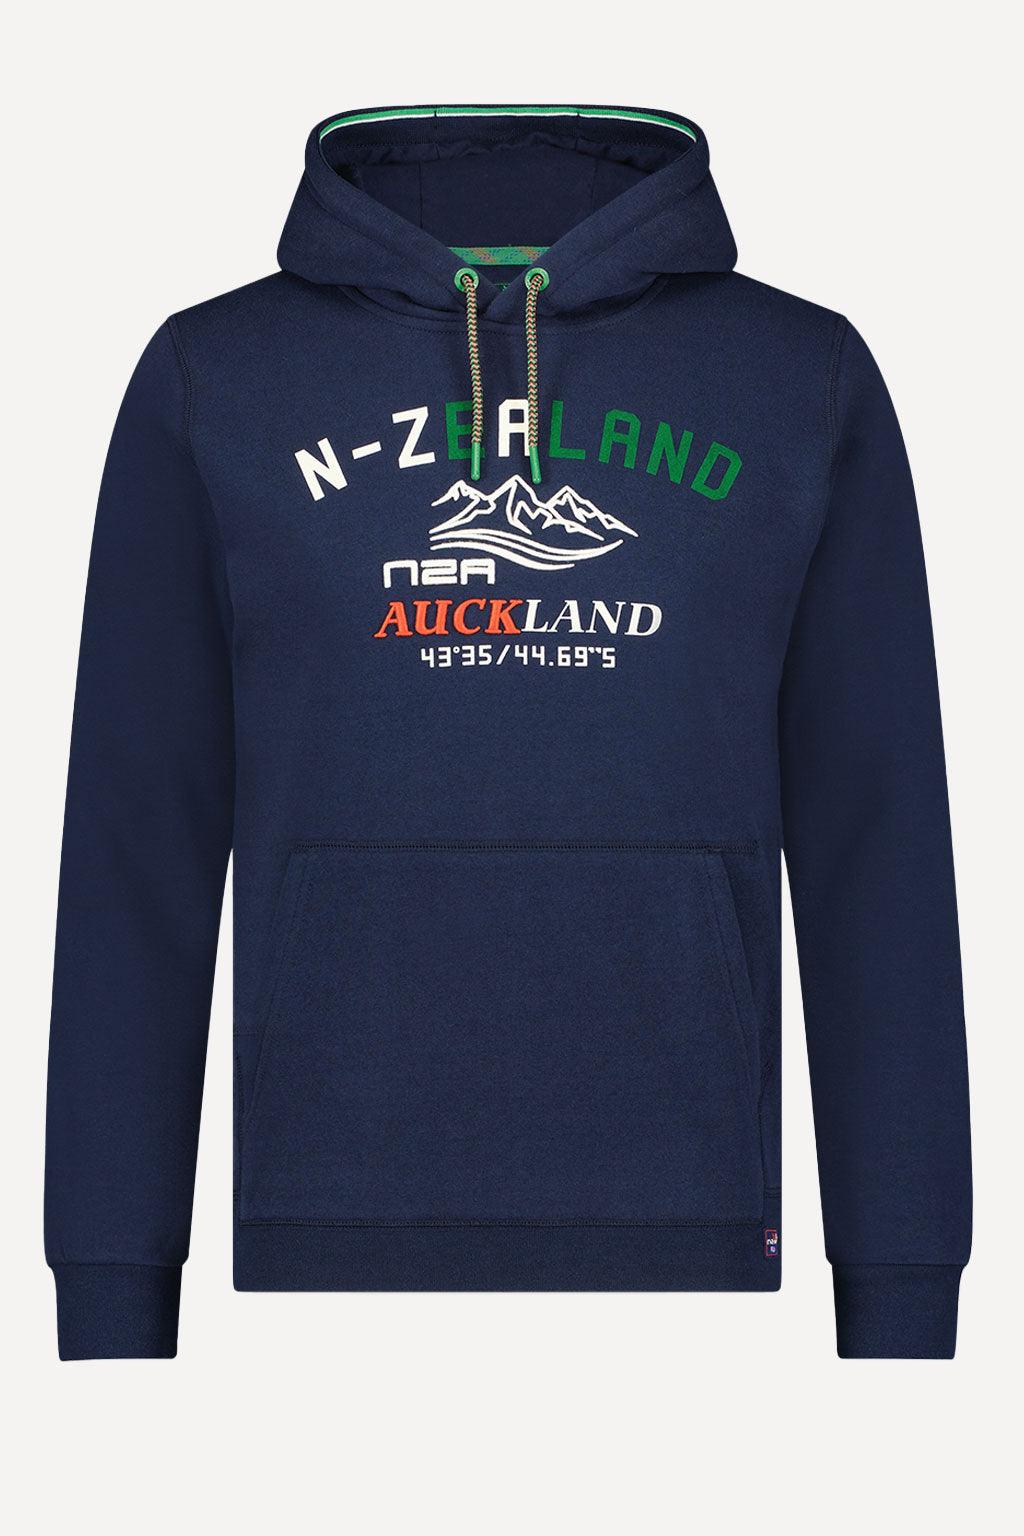 New Zealand hoodie | Big Boss | the menswear concept